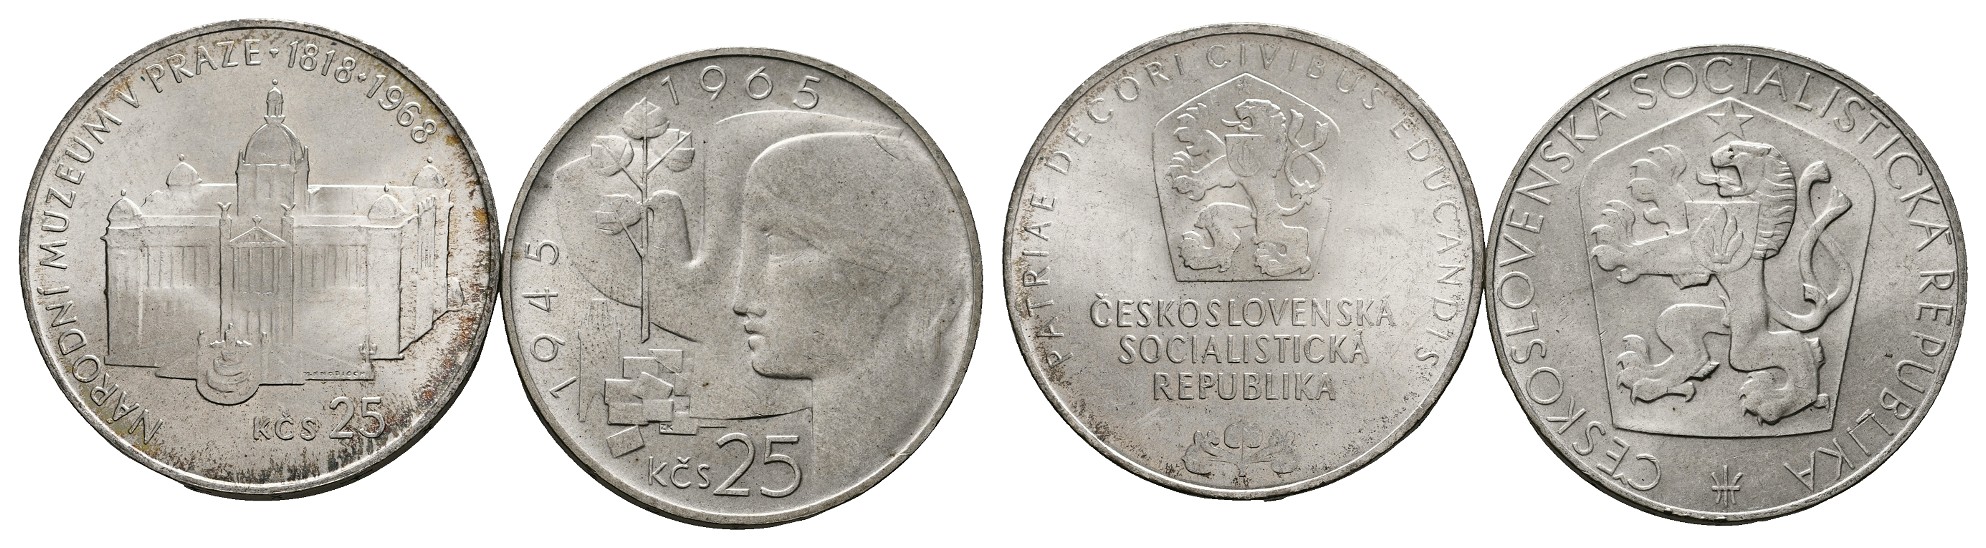  MGS Nürnberg 1 Pfennig 1771 vz   